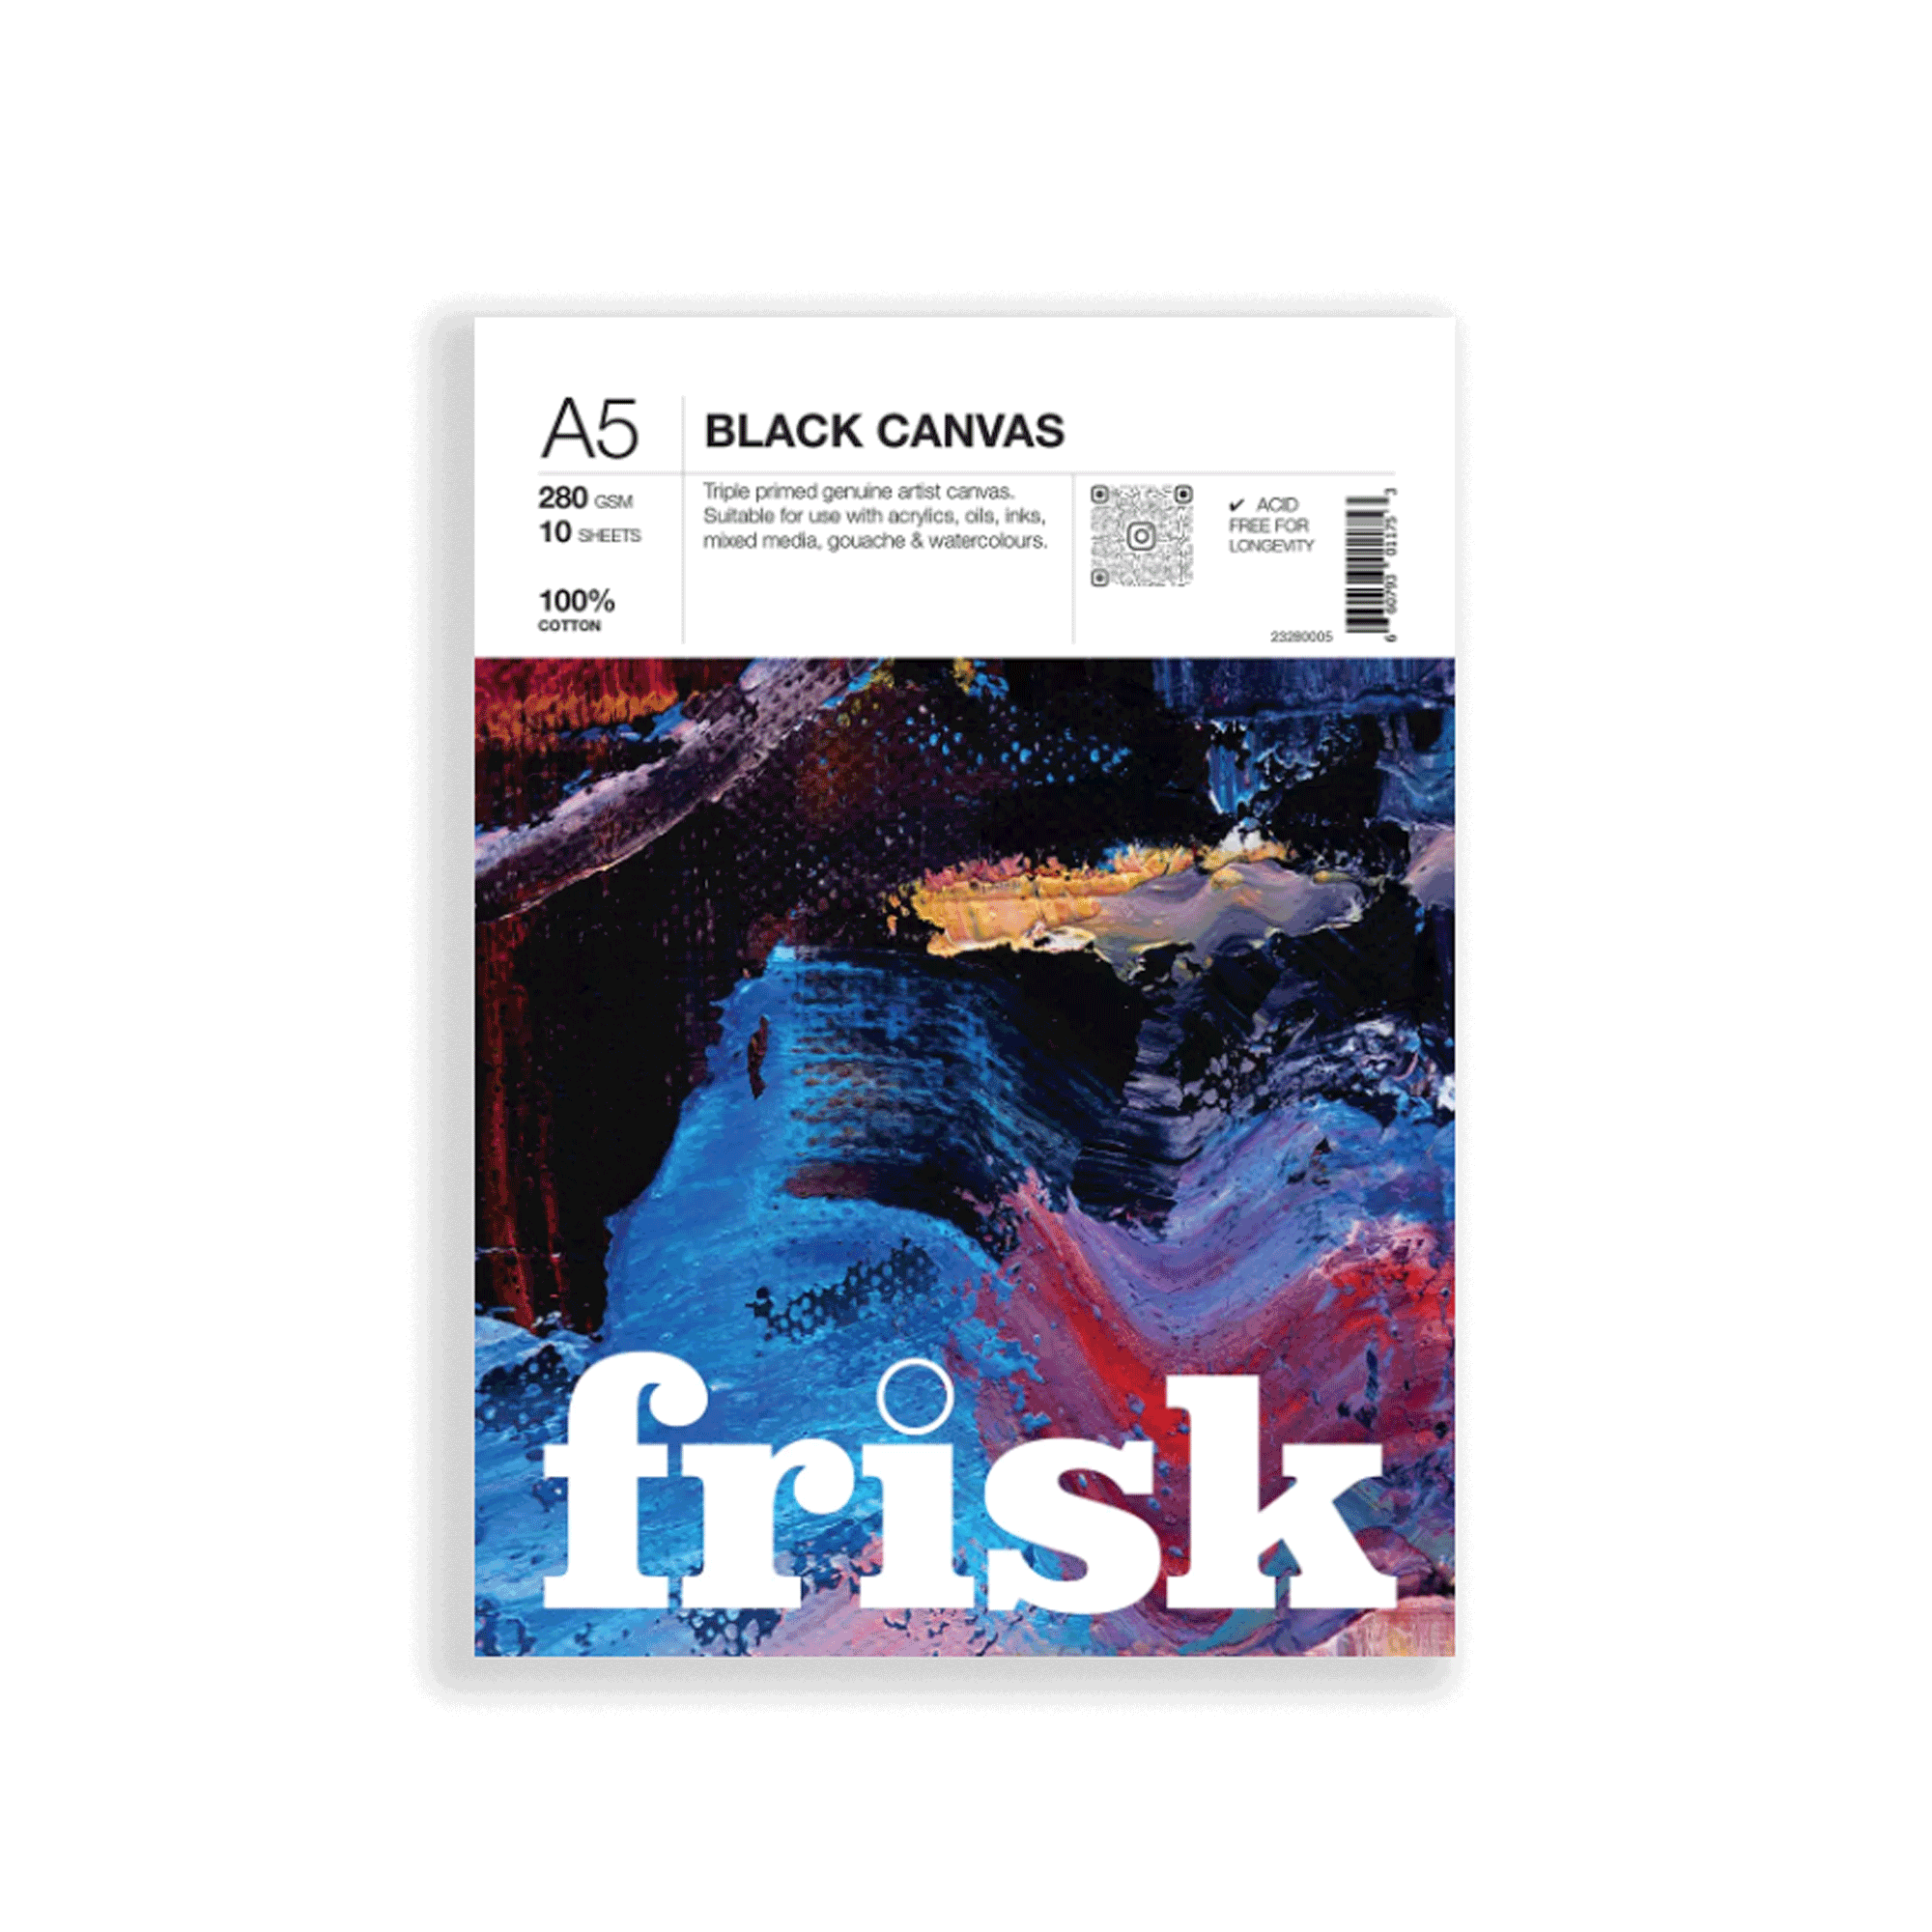 Frisk Black Canvas Pad 280gsm - A5